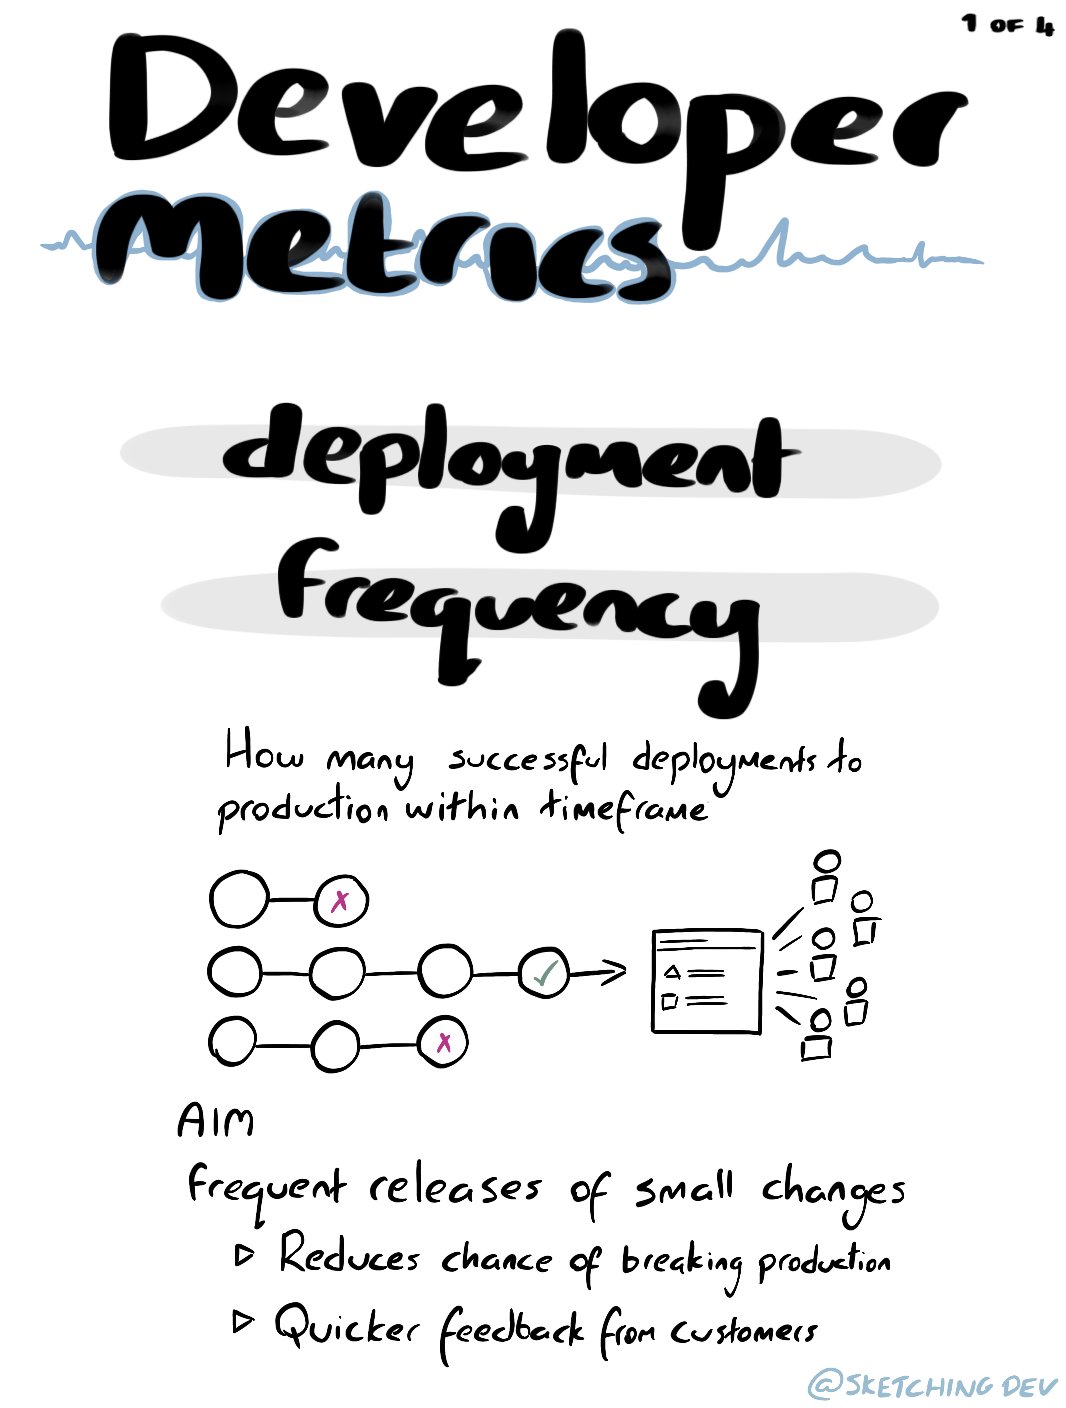 Developer Metrics: Deployment Frequency